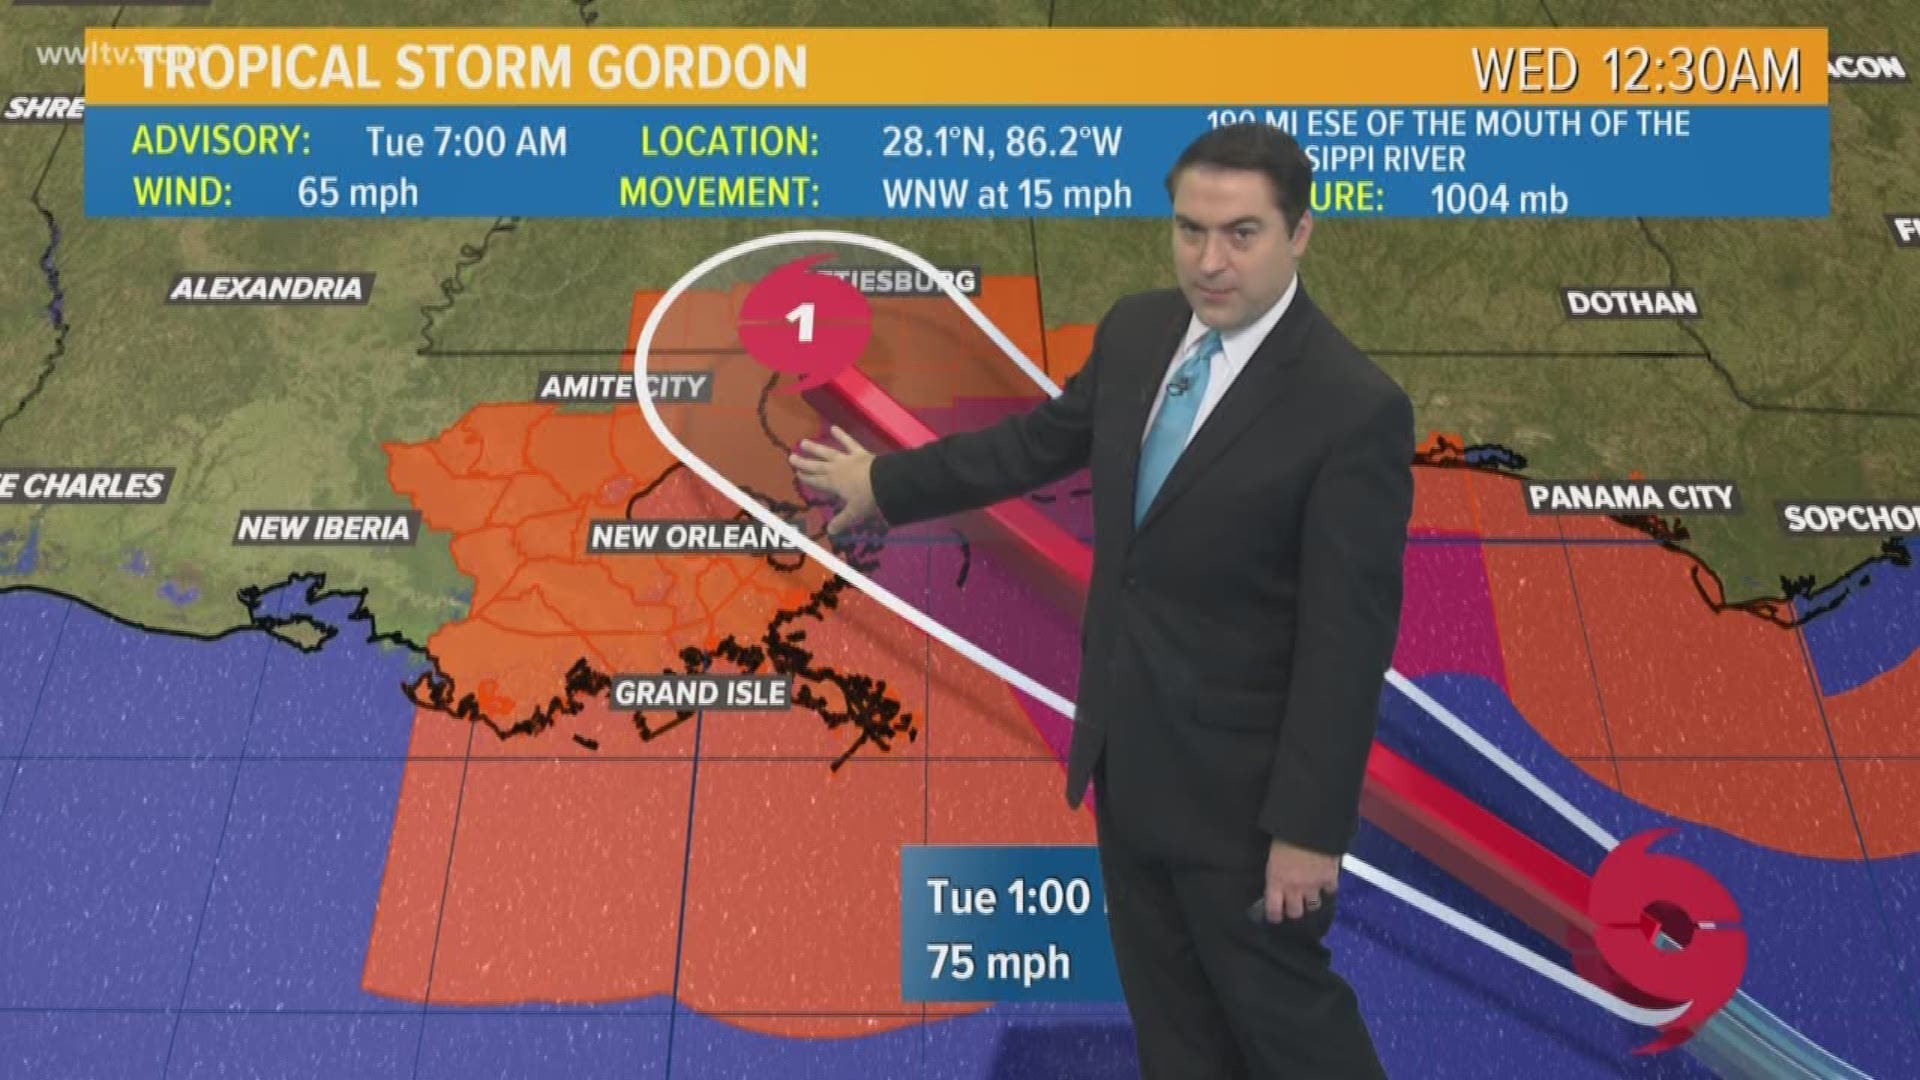 7 AM - Tropical Storm Gordon expected to make landfall as hurricane